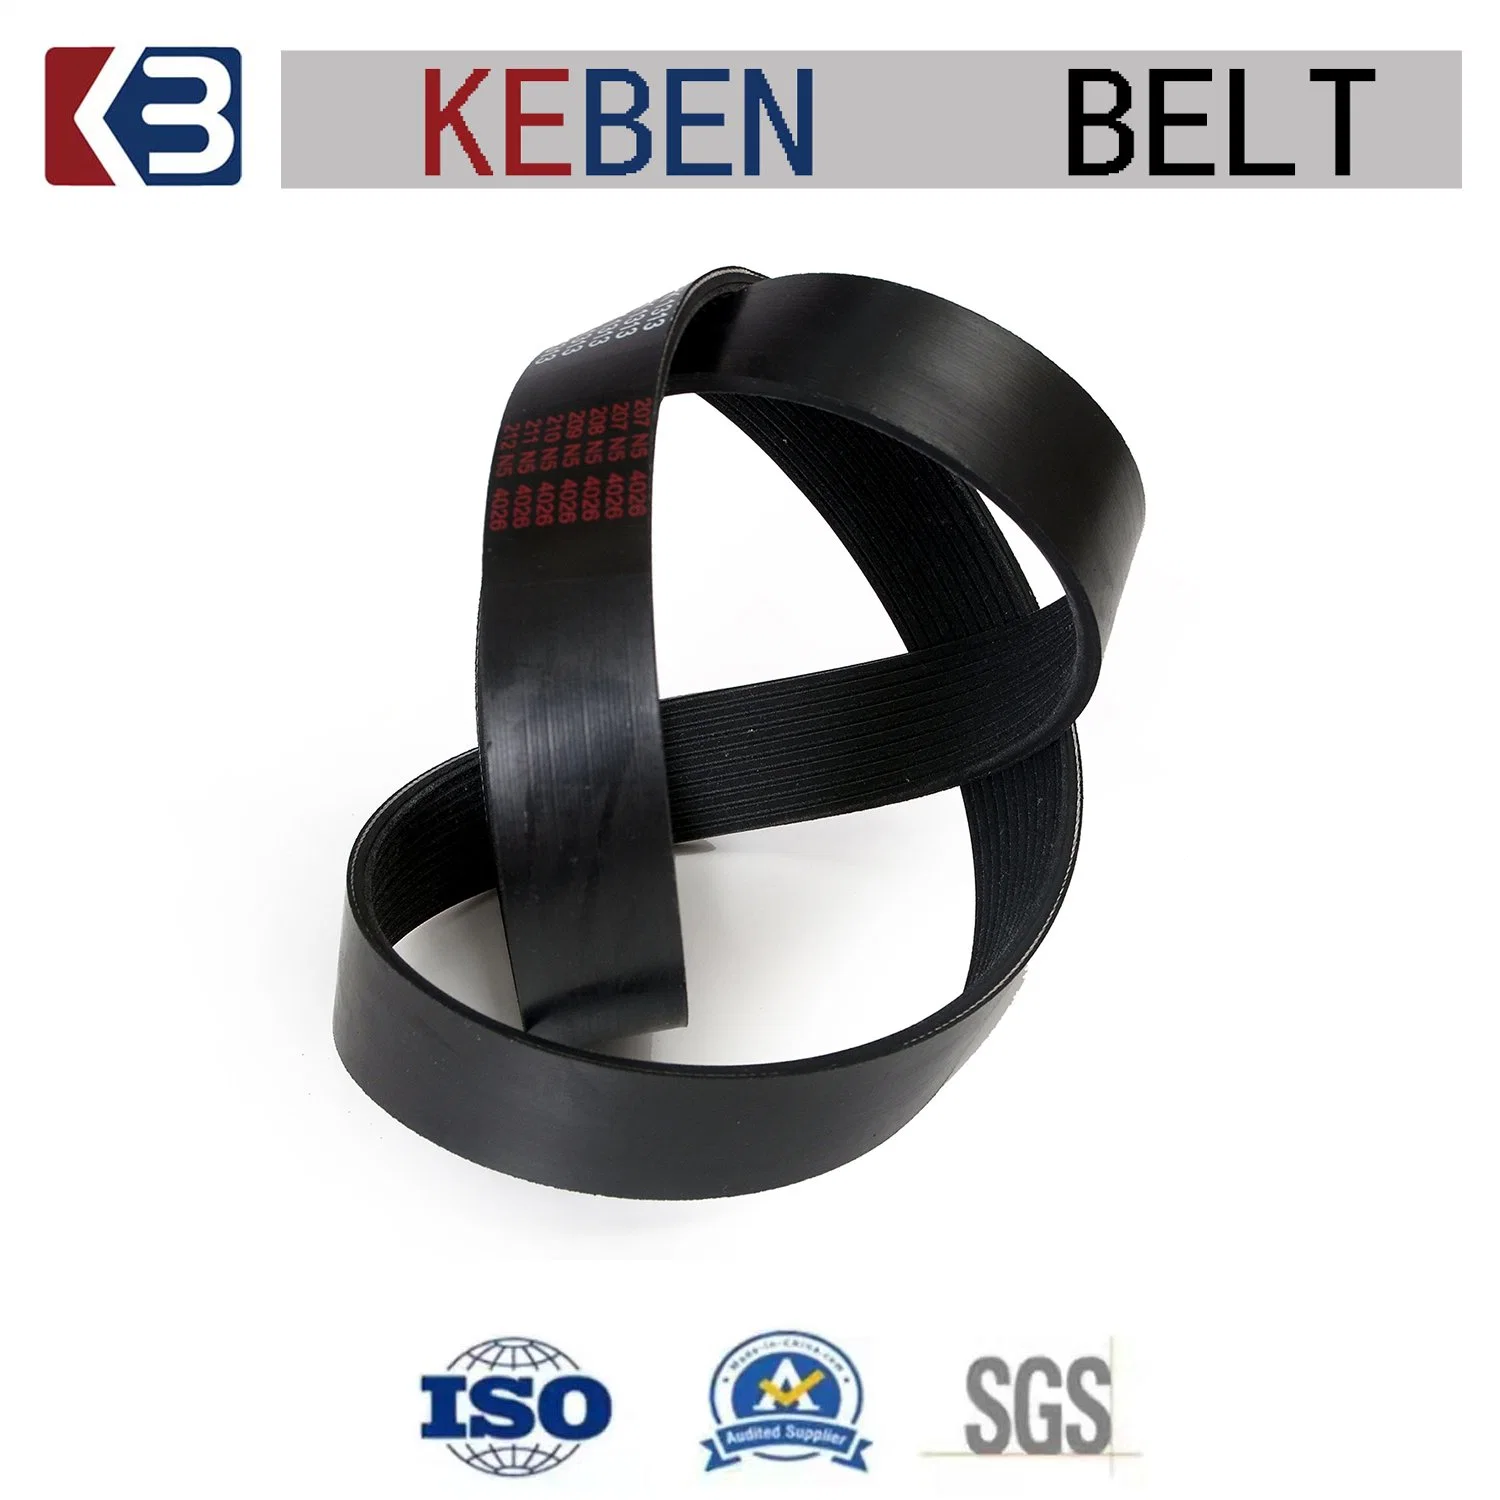 Large Intensity Excellent Conveyor Industry Pk Belt Auto Rubber Drive Belts Multi-Wedge Engine Pk Belts for Machine 9pk 10pk 12pk